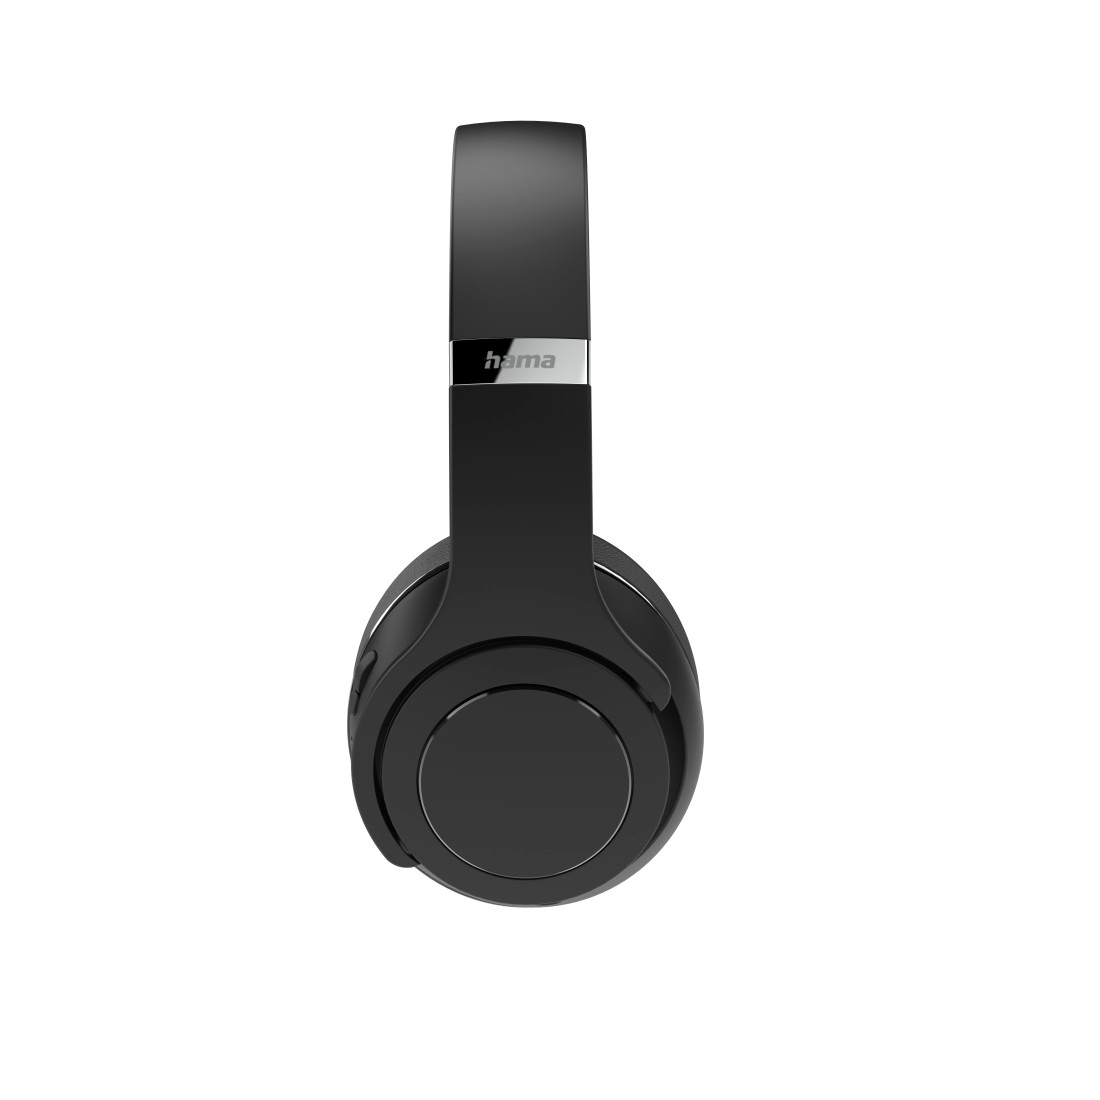 XXL 2 UNIVERSAL Bluetooth-Kopfhörer Kopfhörer« ➥ 1 in und »Bluetooth®-Kopfhörer Funktion, Lautsprecher Hama Garantie | 3 Jahre